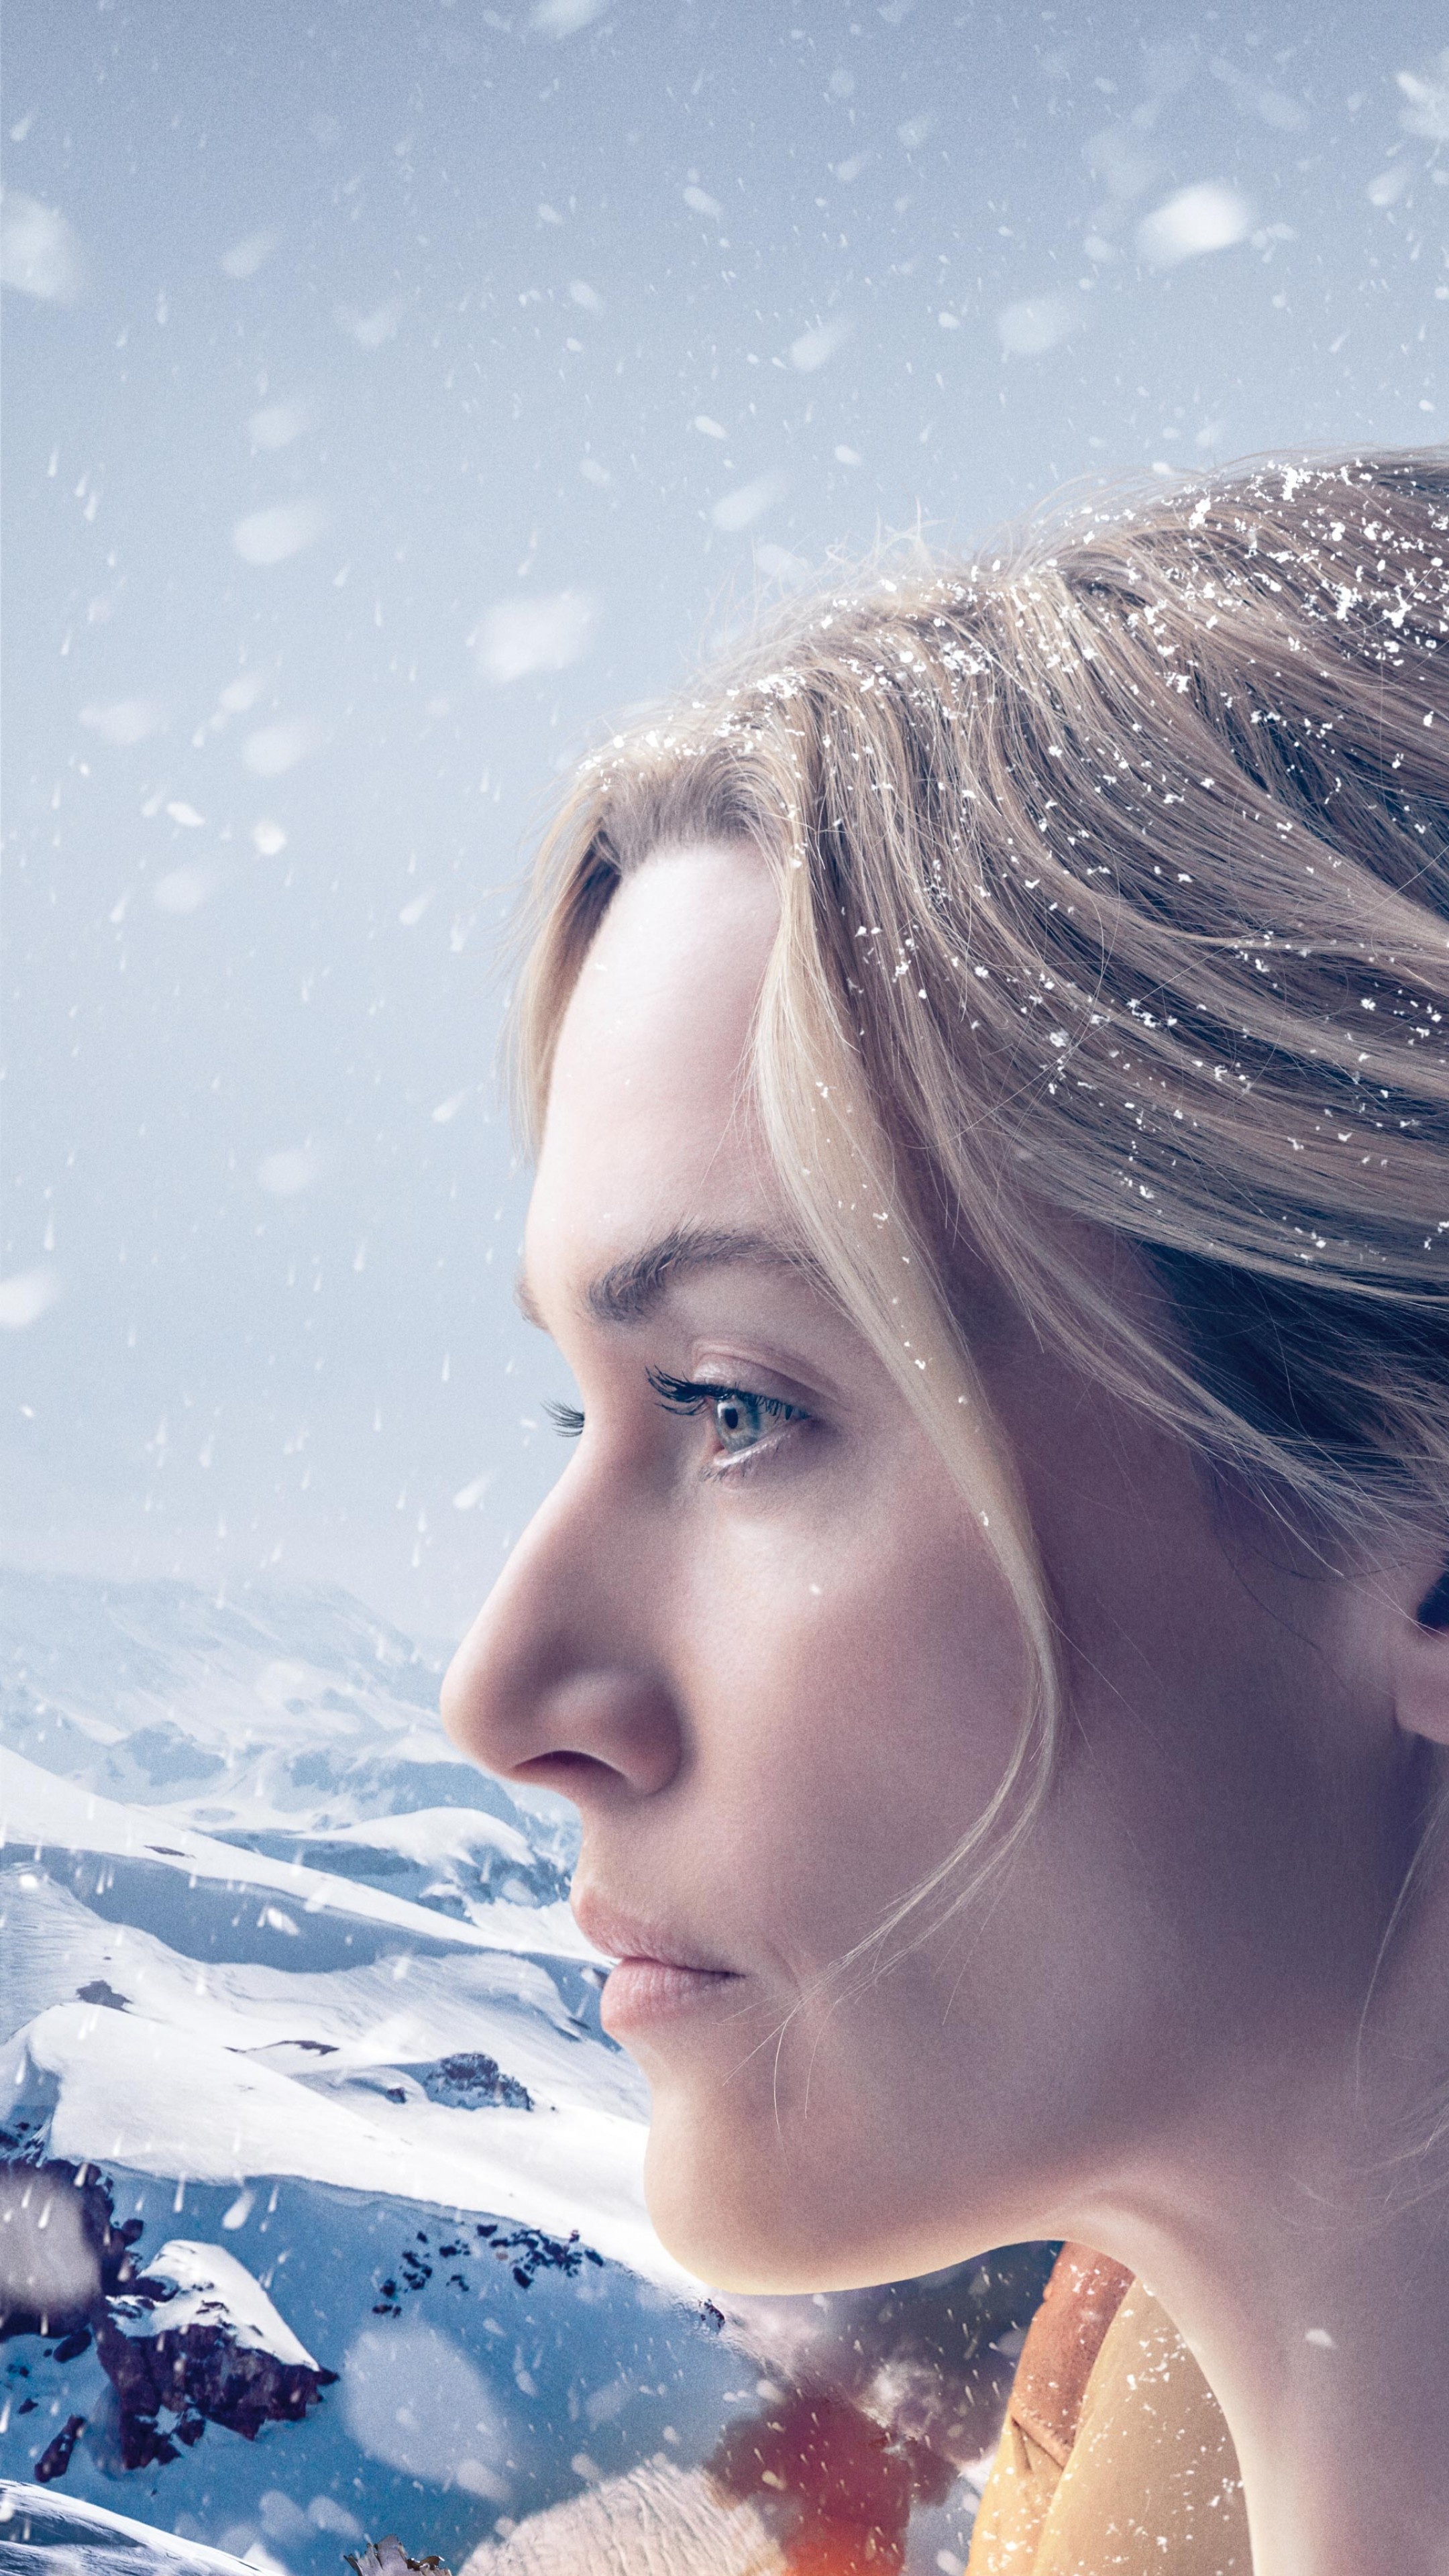 Kate Winslet, The Mountain Between Us movie, Idris Elba, 5K wallpaper, 2160x3840 4K Handy